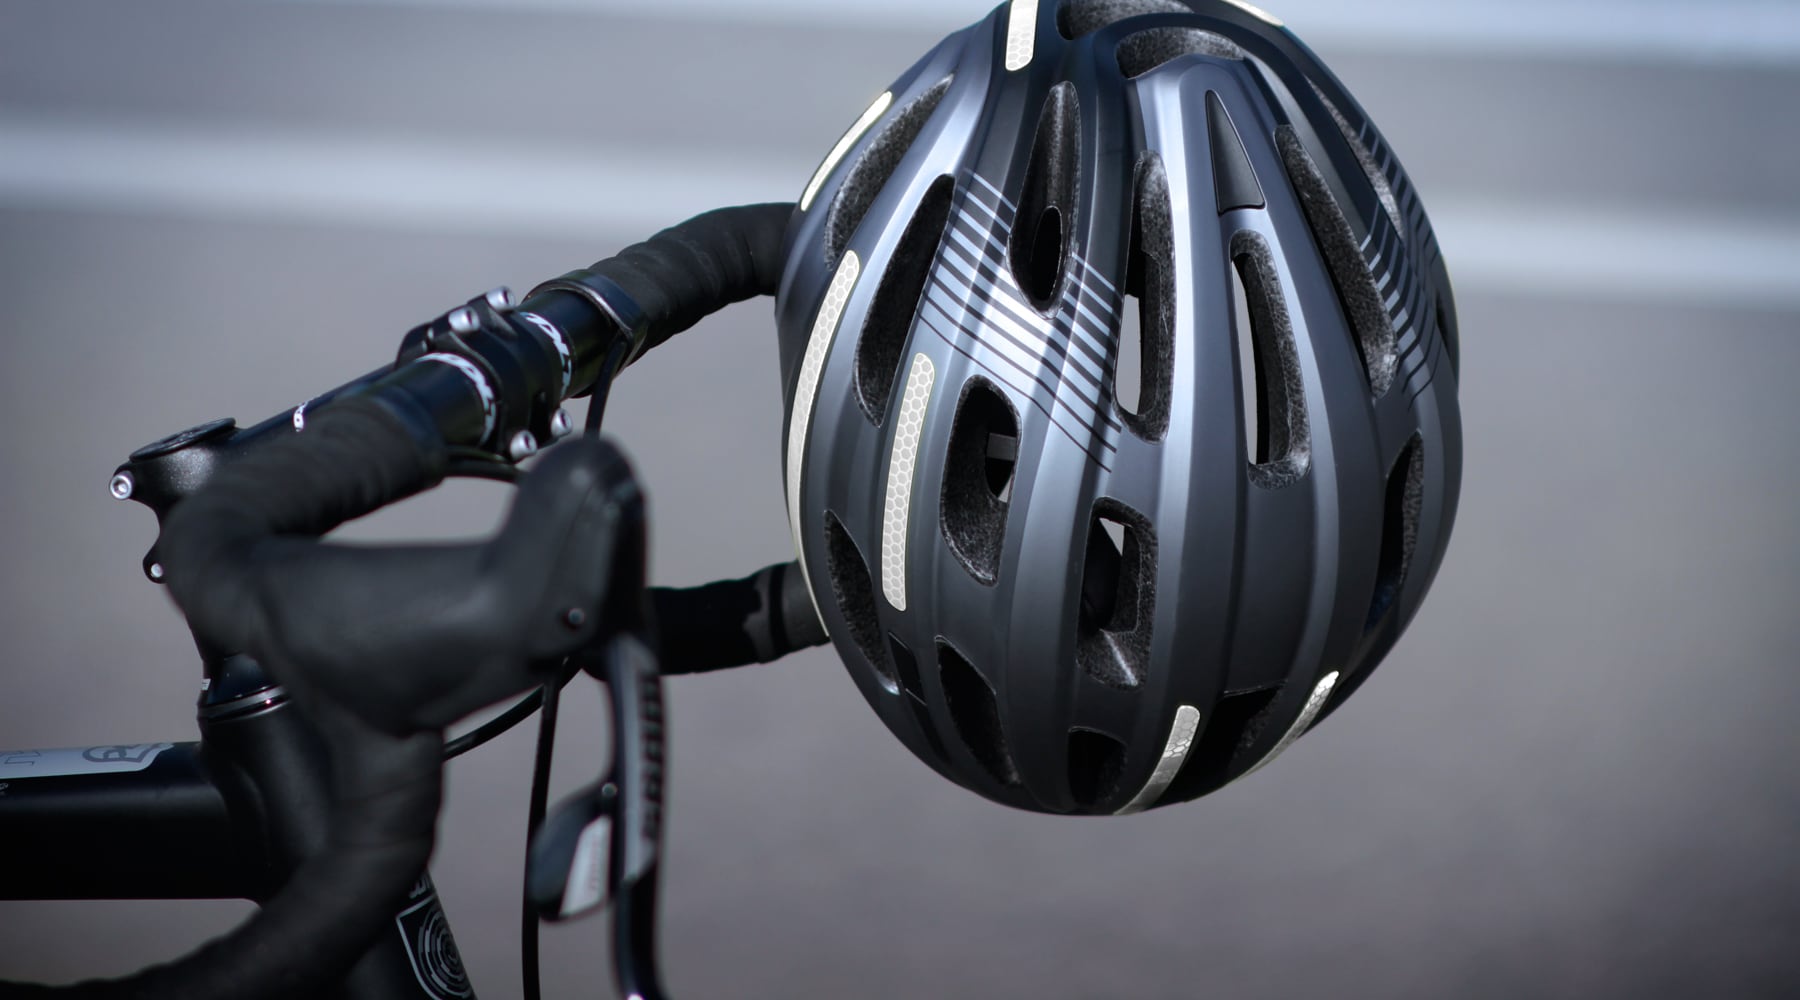 The best bicycle helmet looks like this!